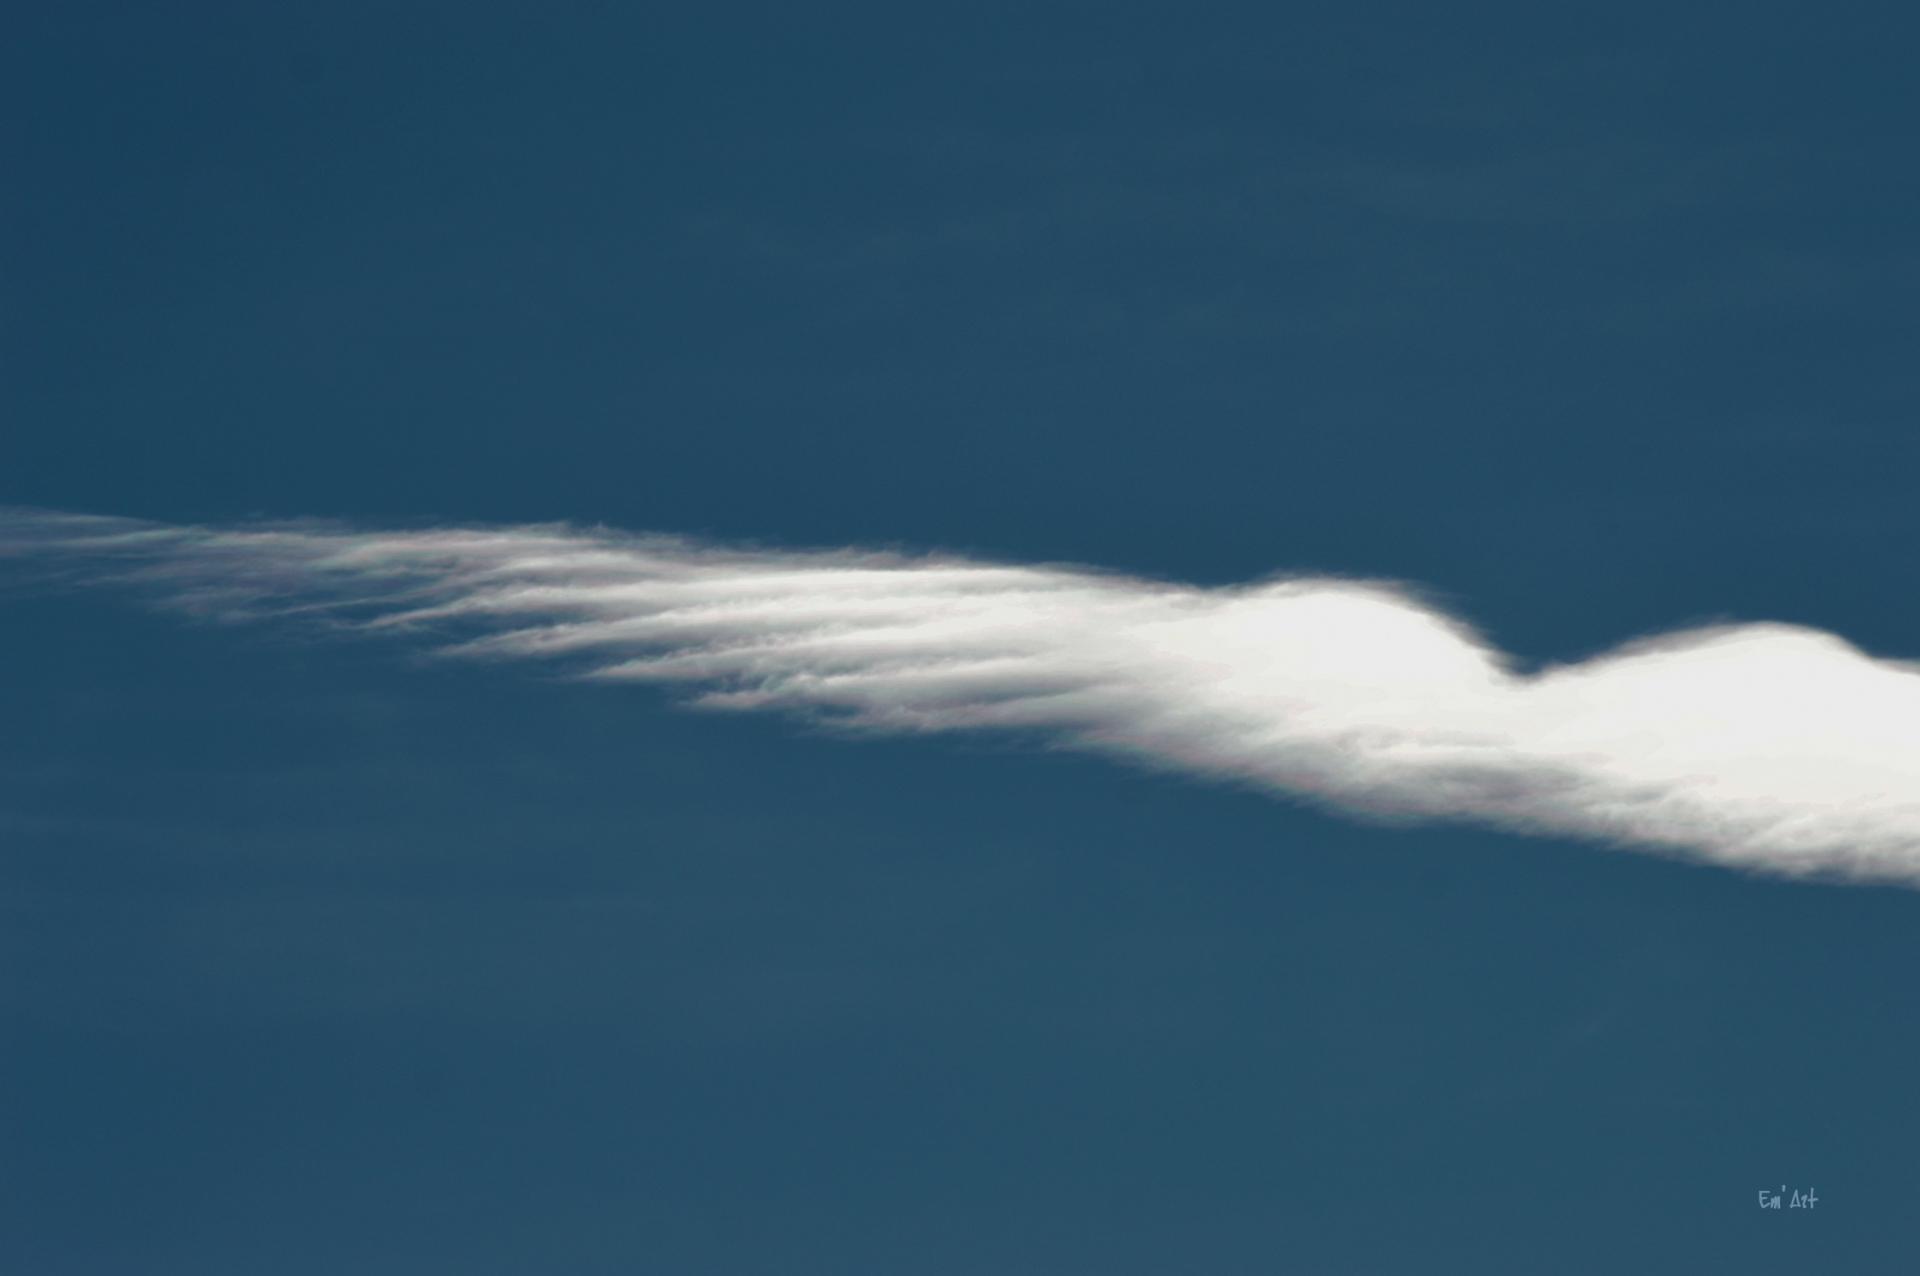 Angel's wing